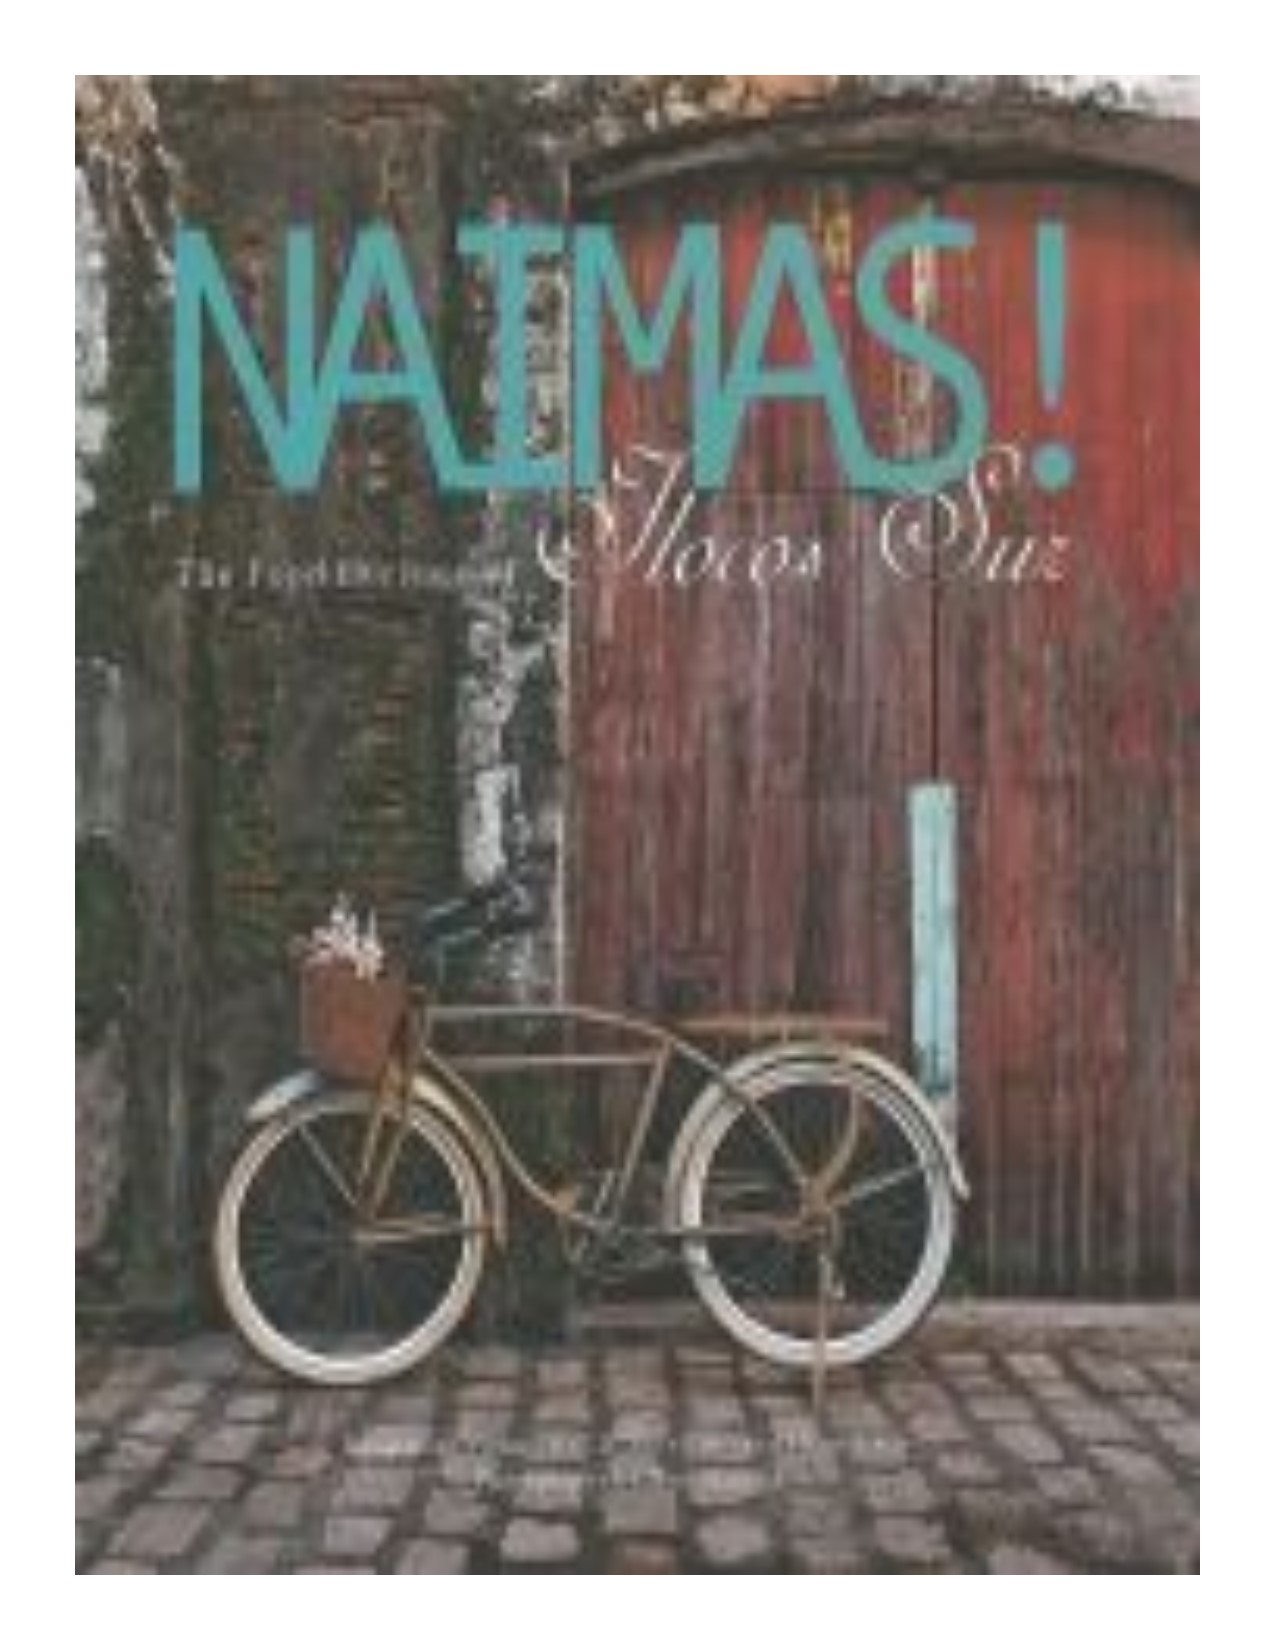 Naimas! the food heritage of Ilocos Sur